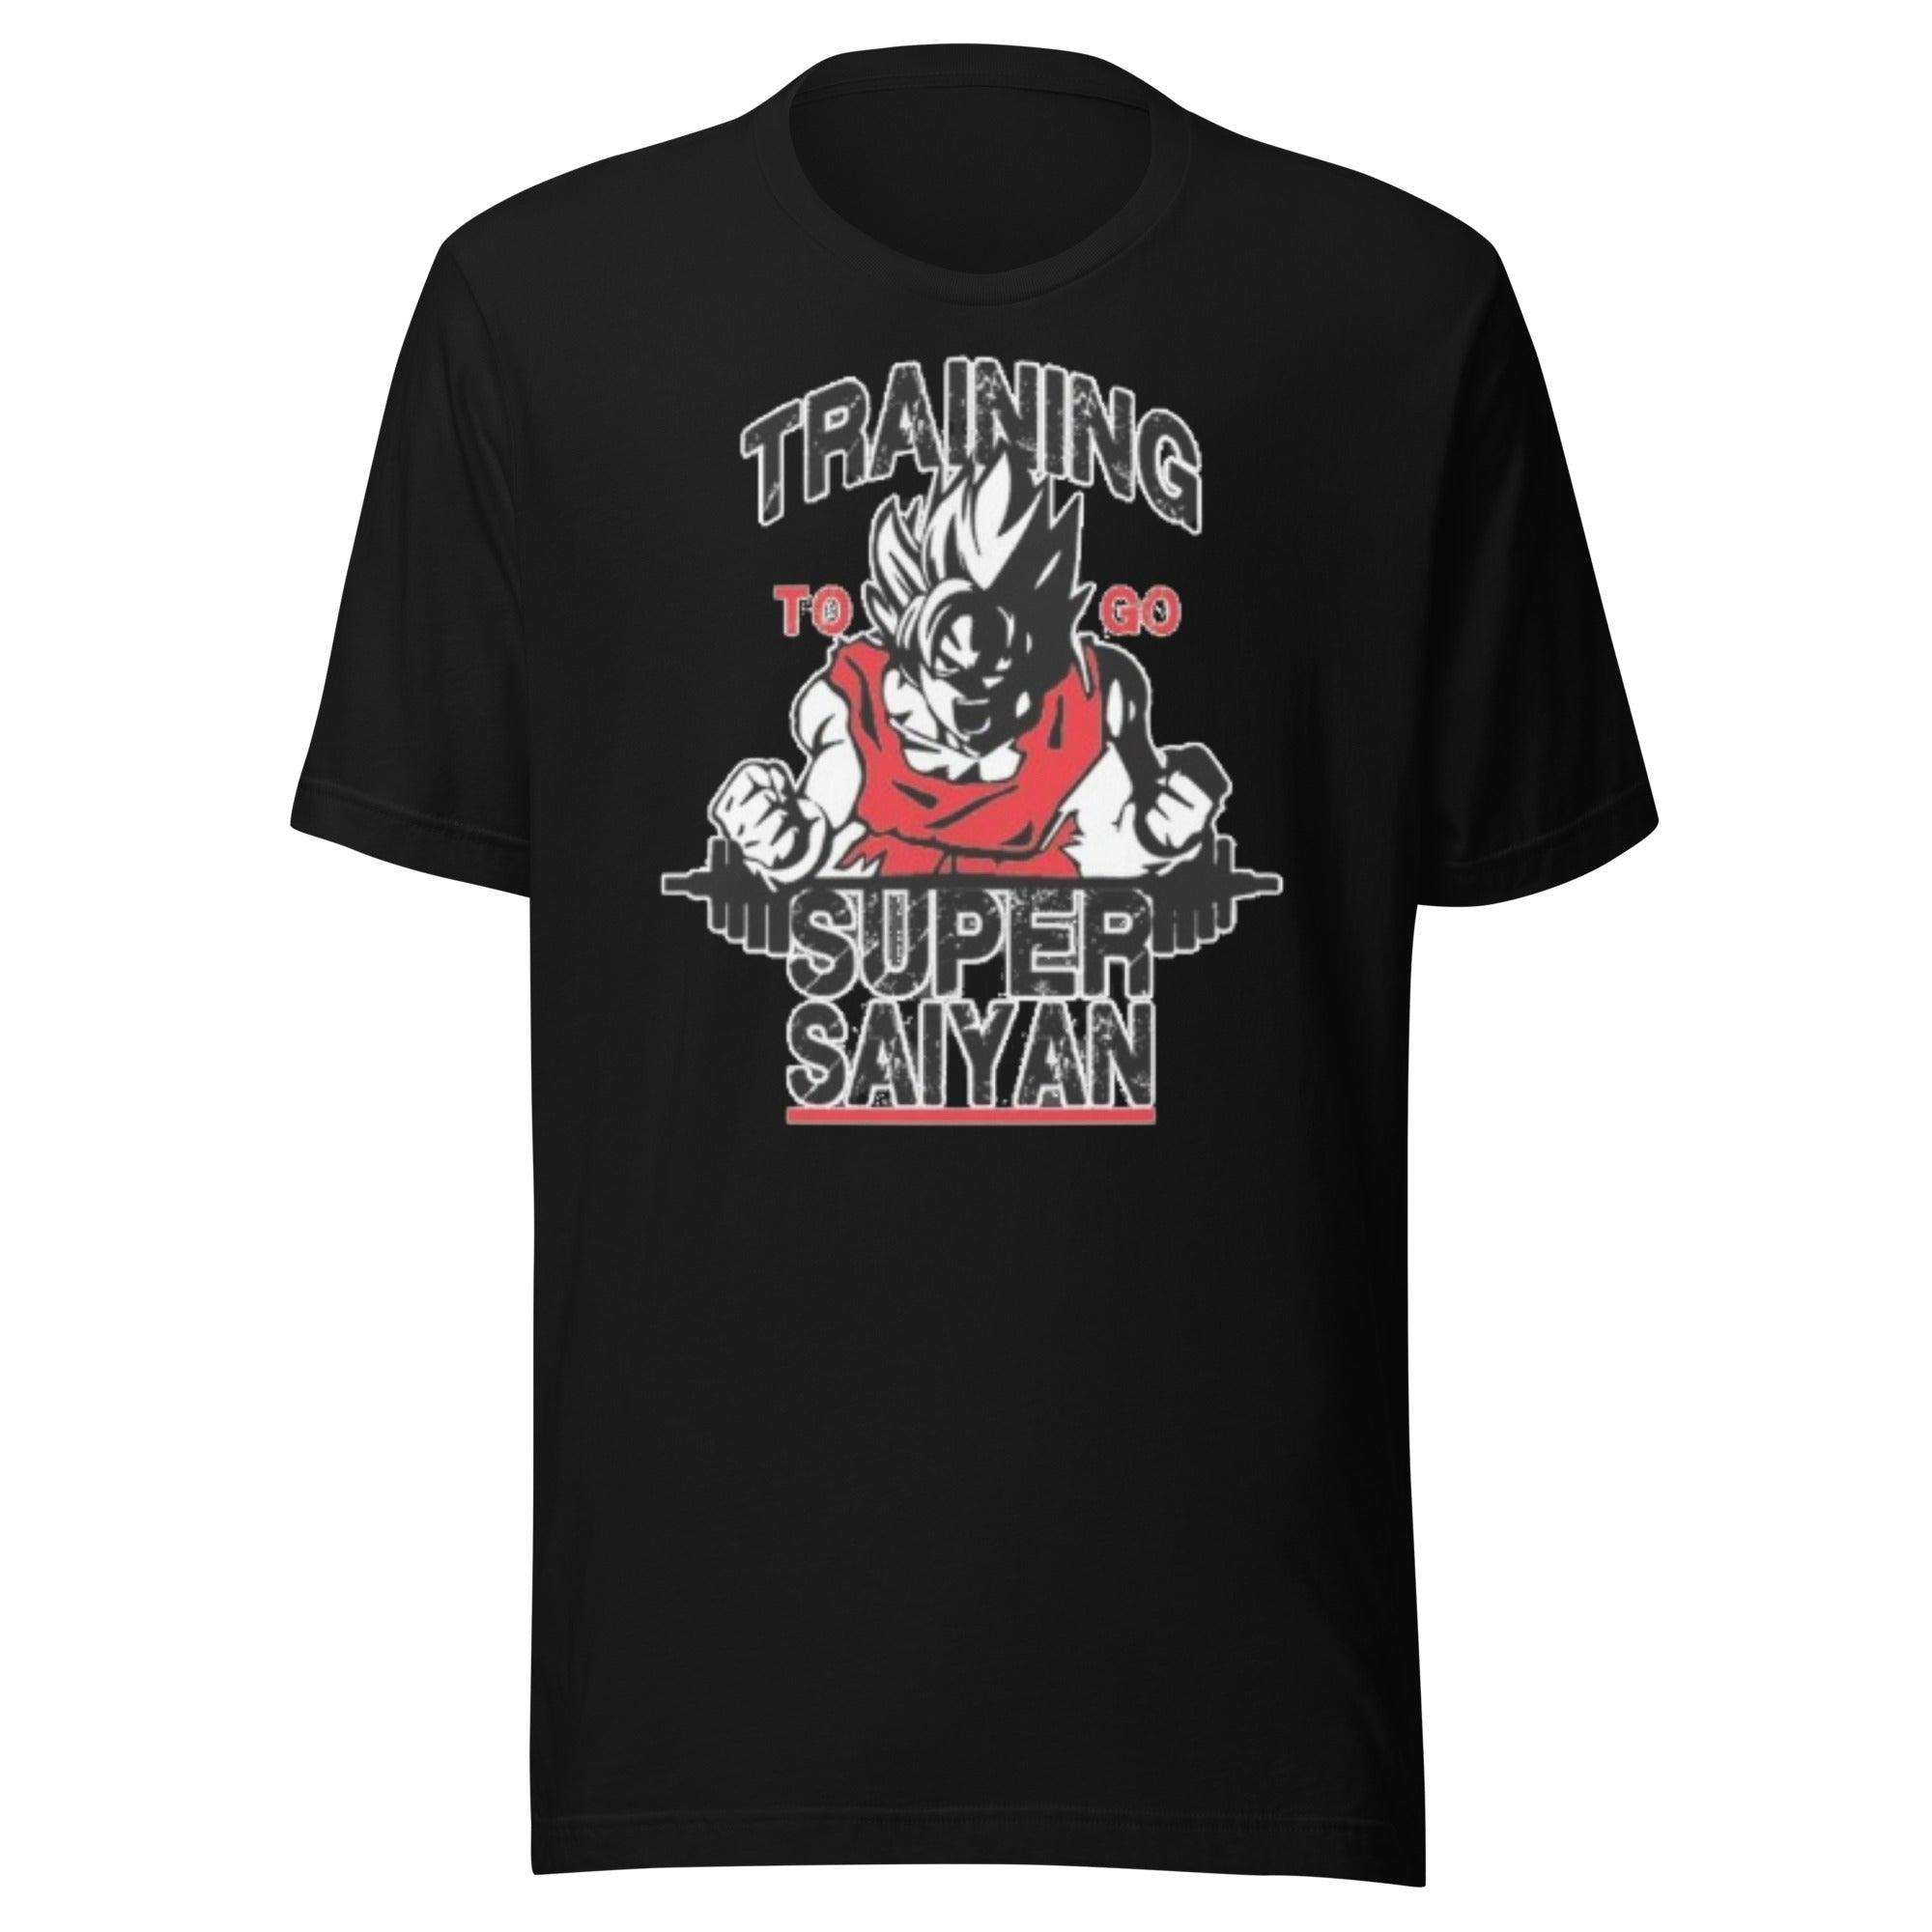 Gym T-shirt Training To Go Super Saiyan Short Sleeve 100% Cotton Crew Neck Top - TopKoalaTee